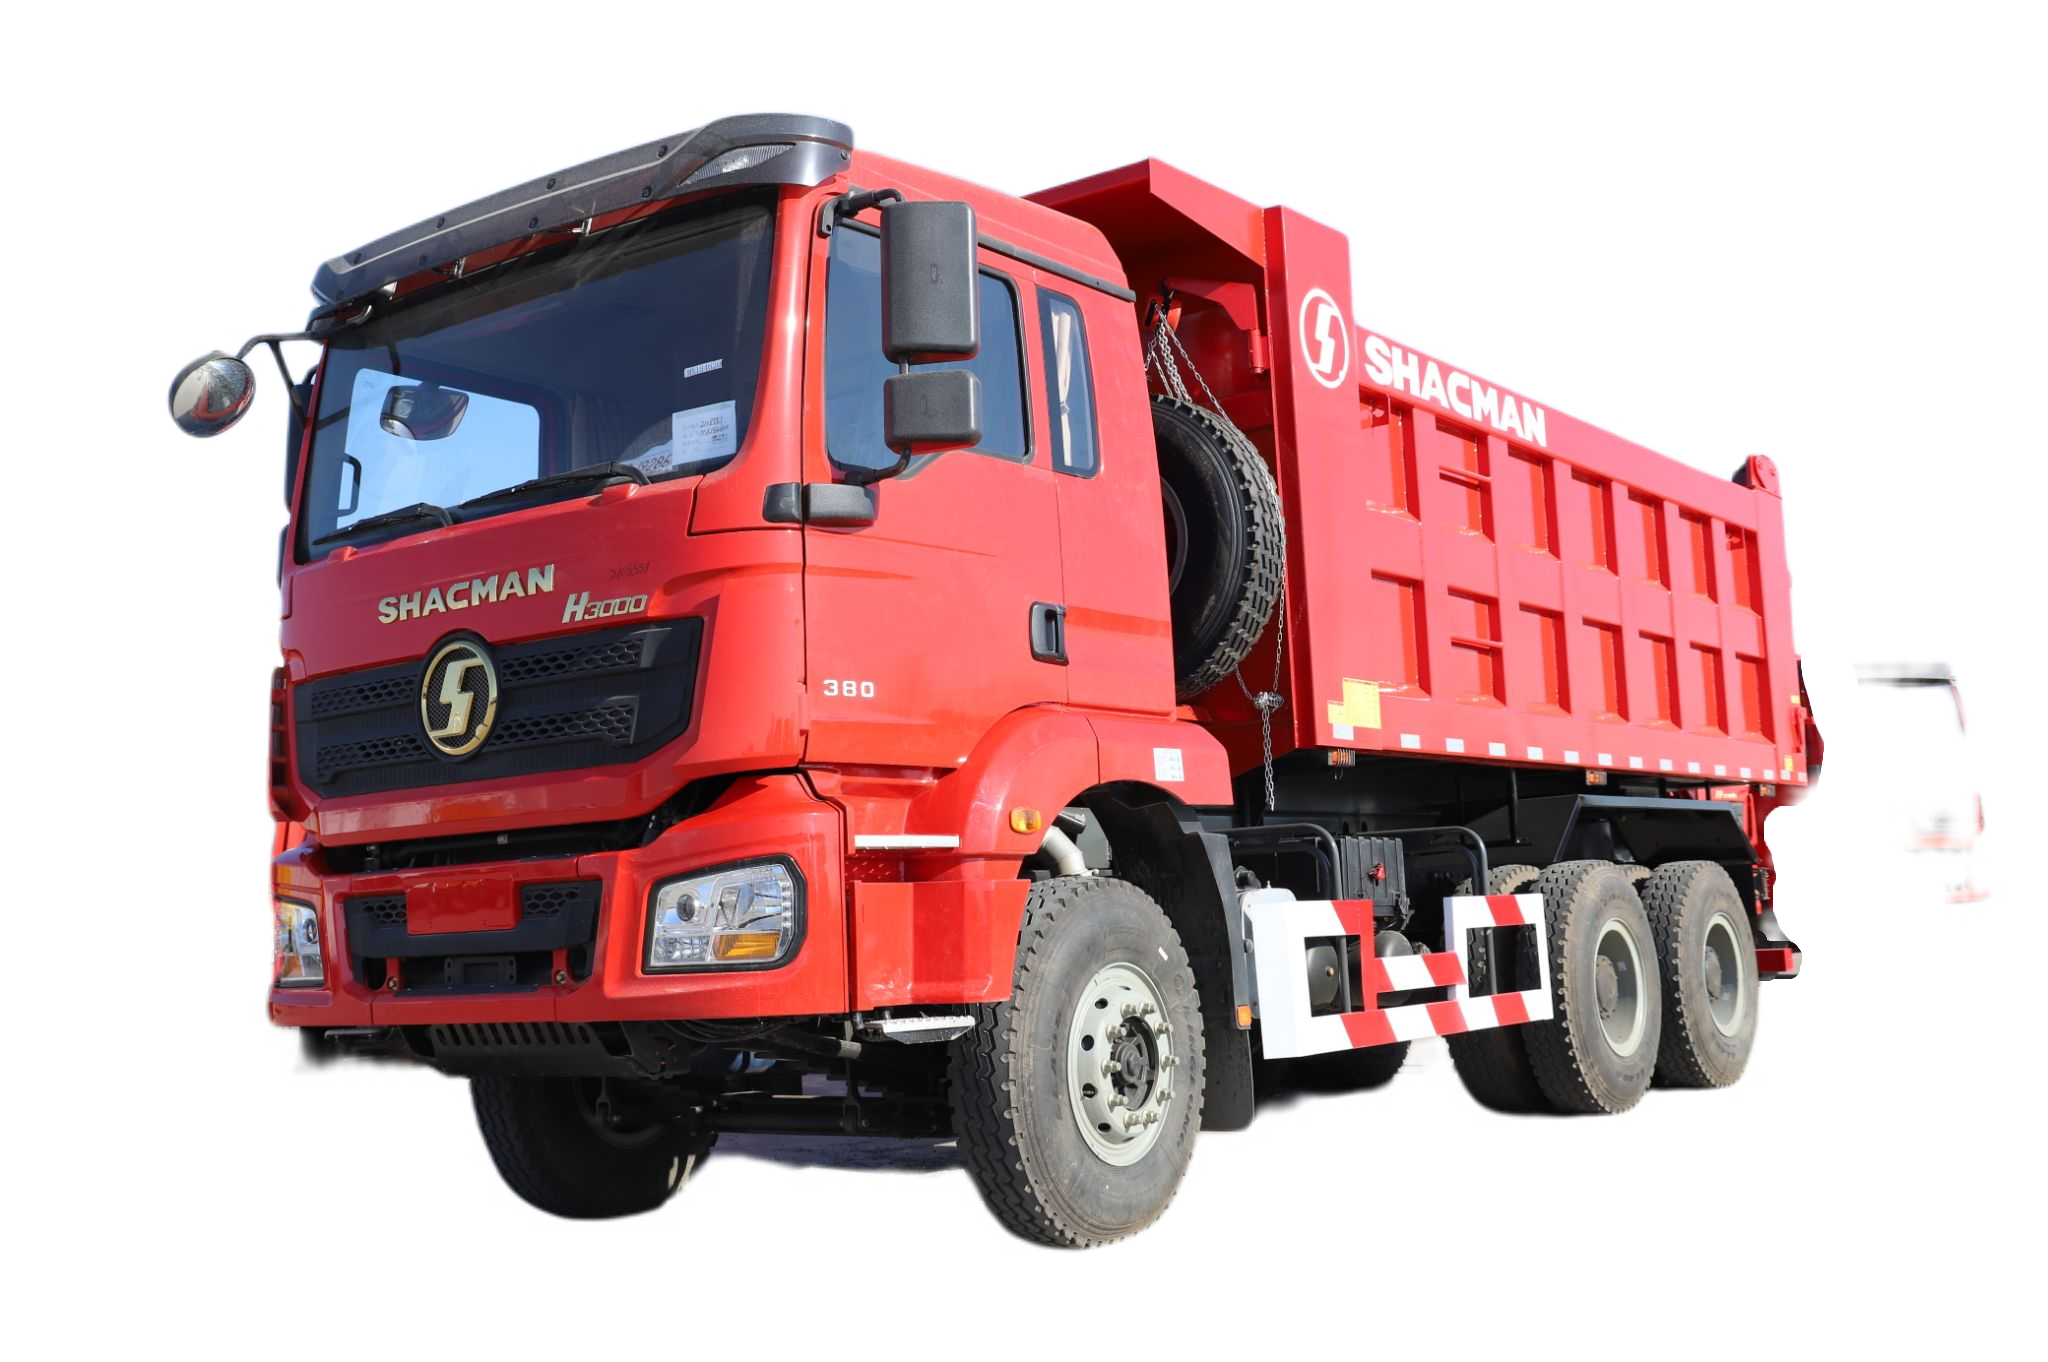 SHACMAN H3000 6x4 Dump Truck